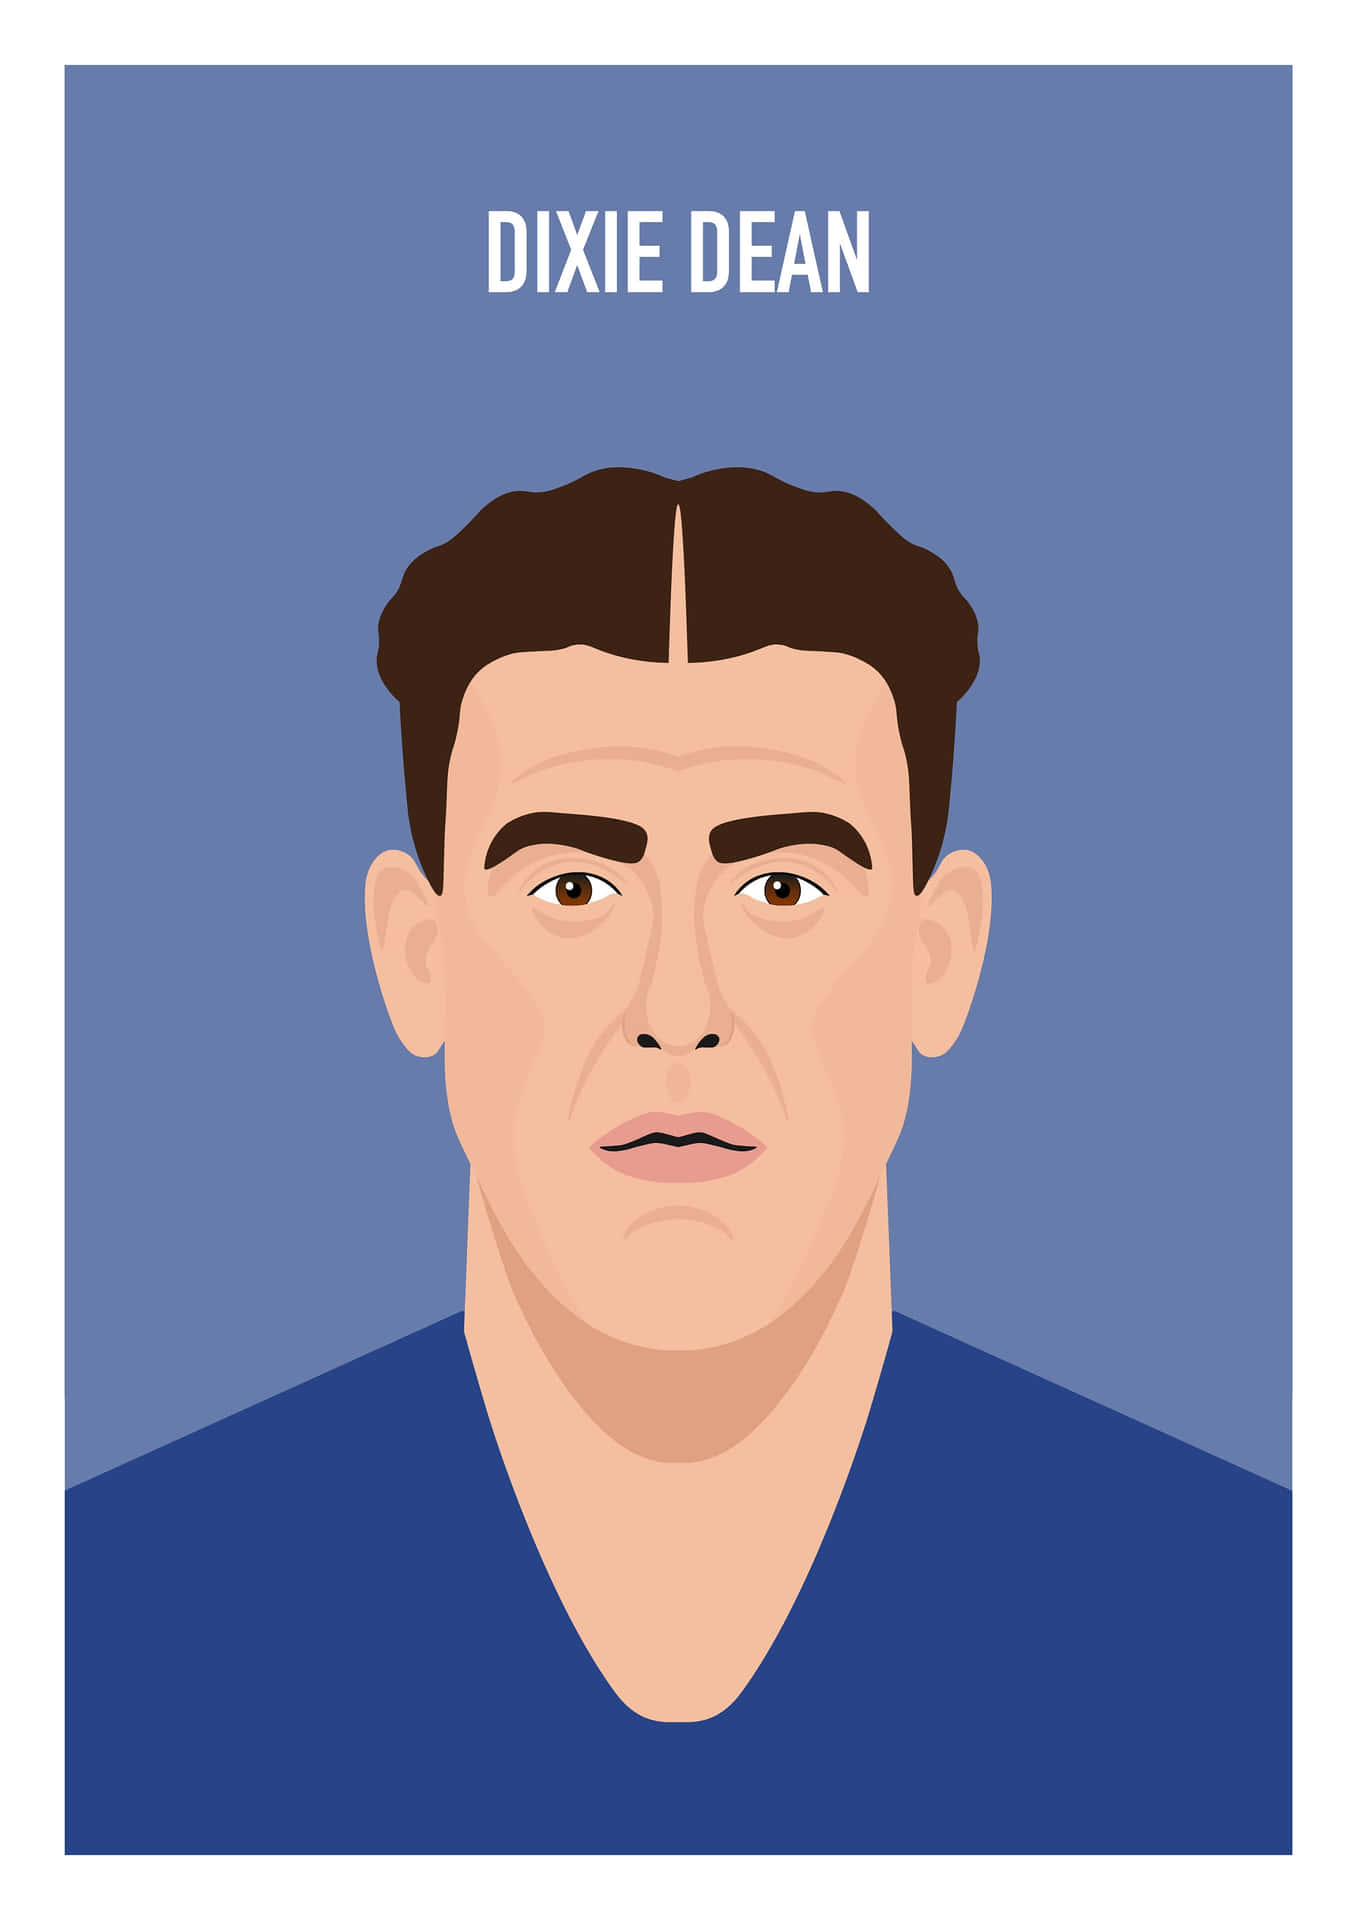 English Football Athlete Dixie Dean Vector Art Wallpaper